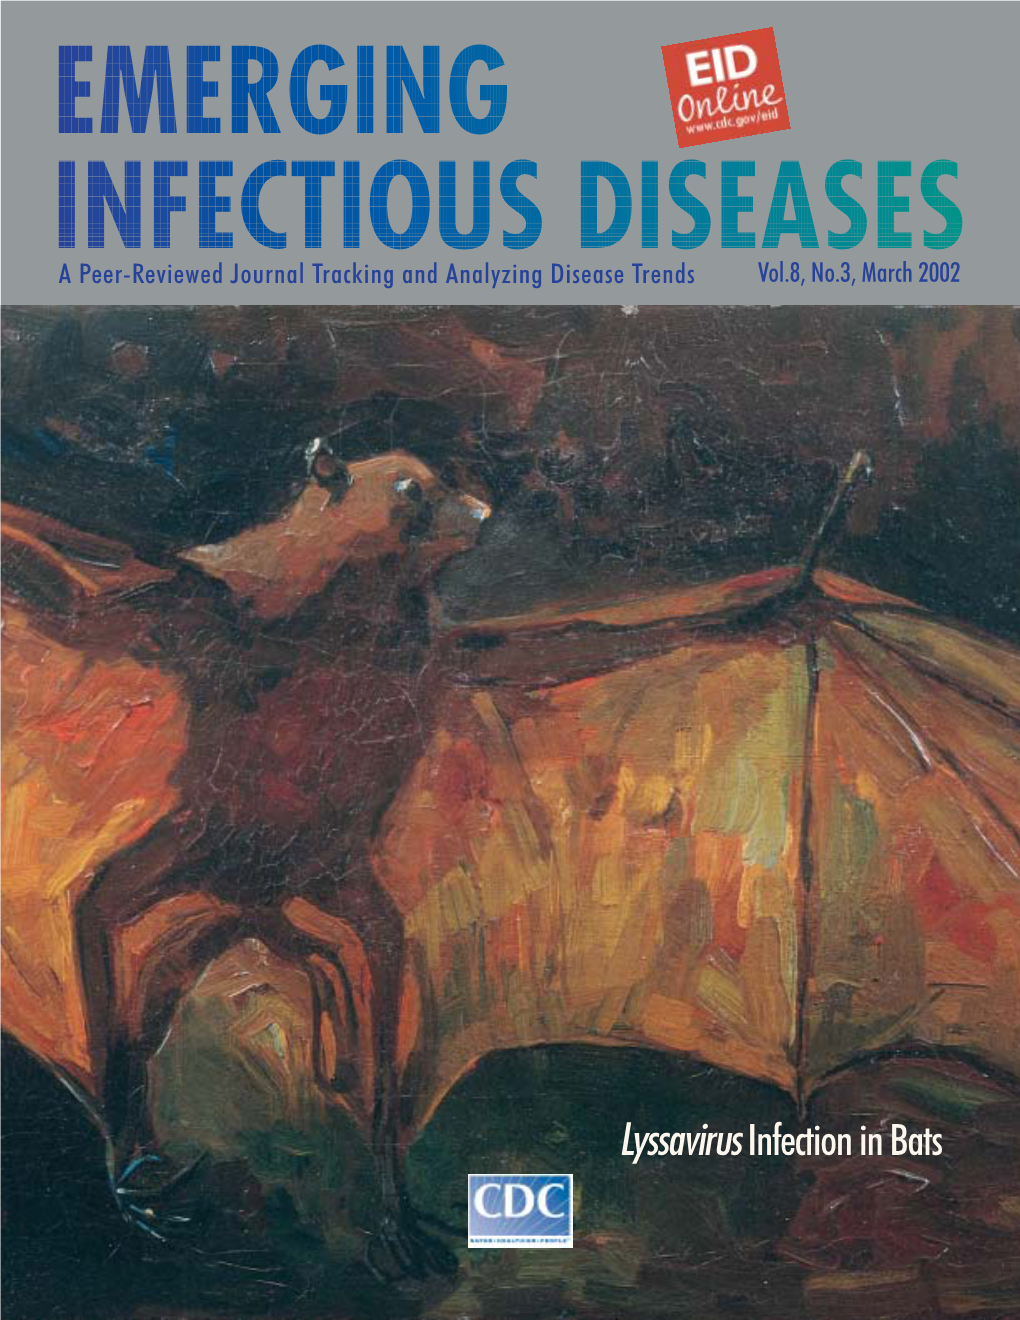 Lyssavirusinfection in Bats